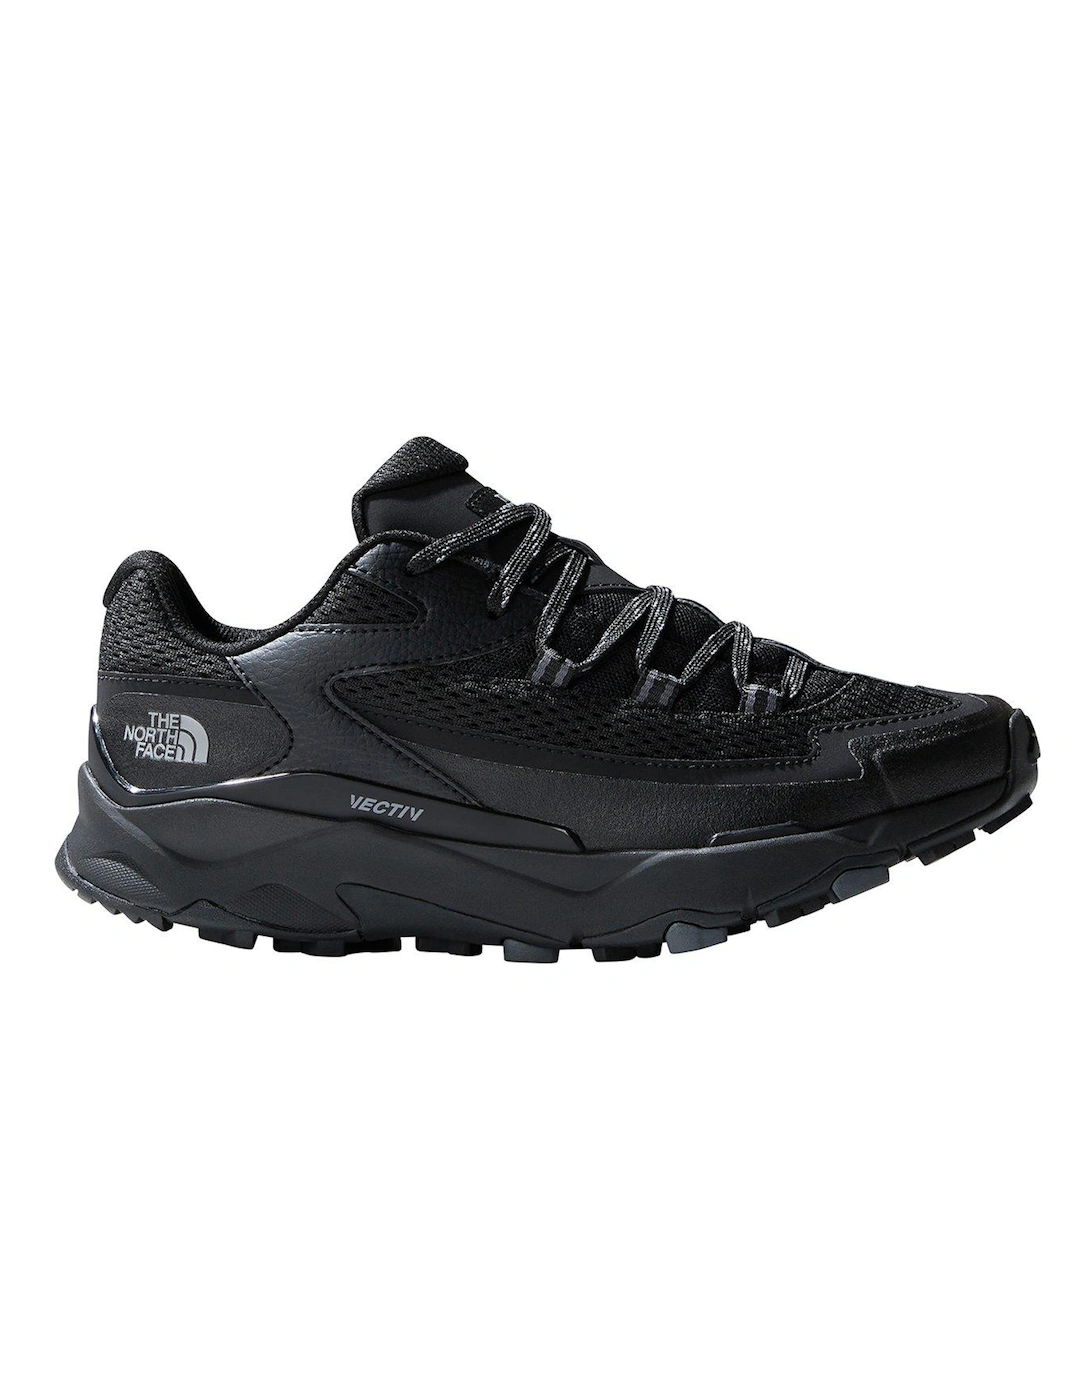 Womens Vectiv Taraval Hiking Shoes - Black, 6 of 5